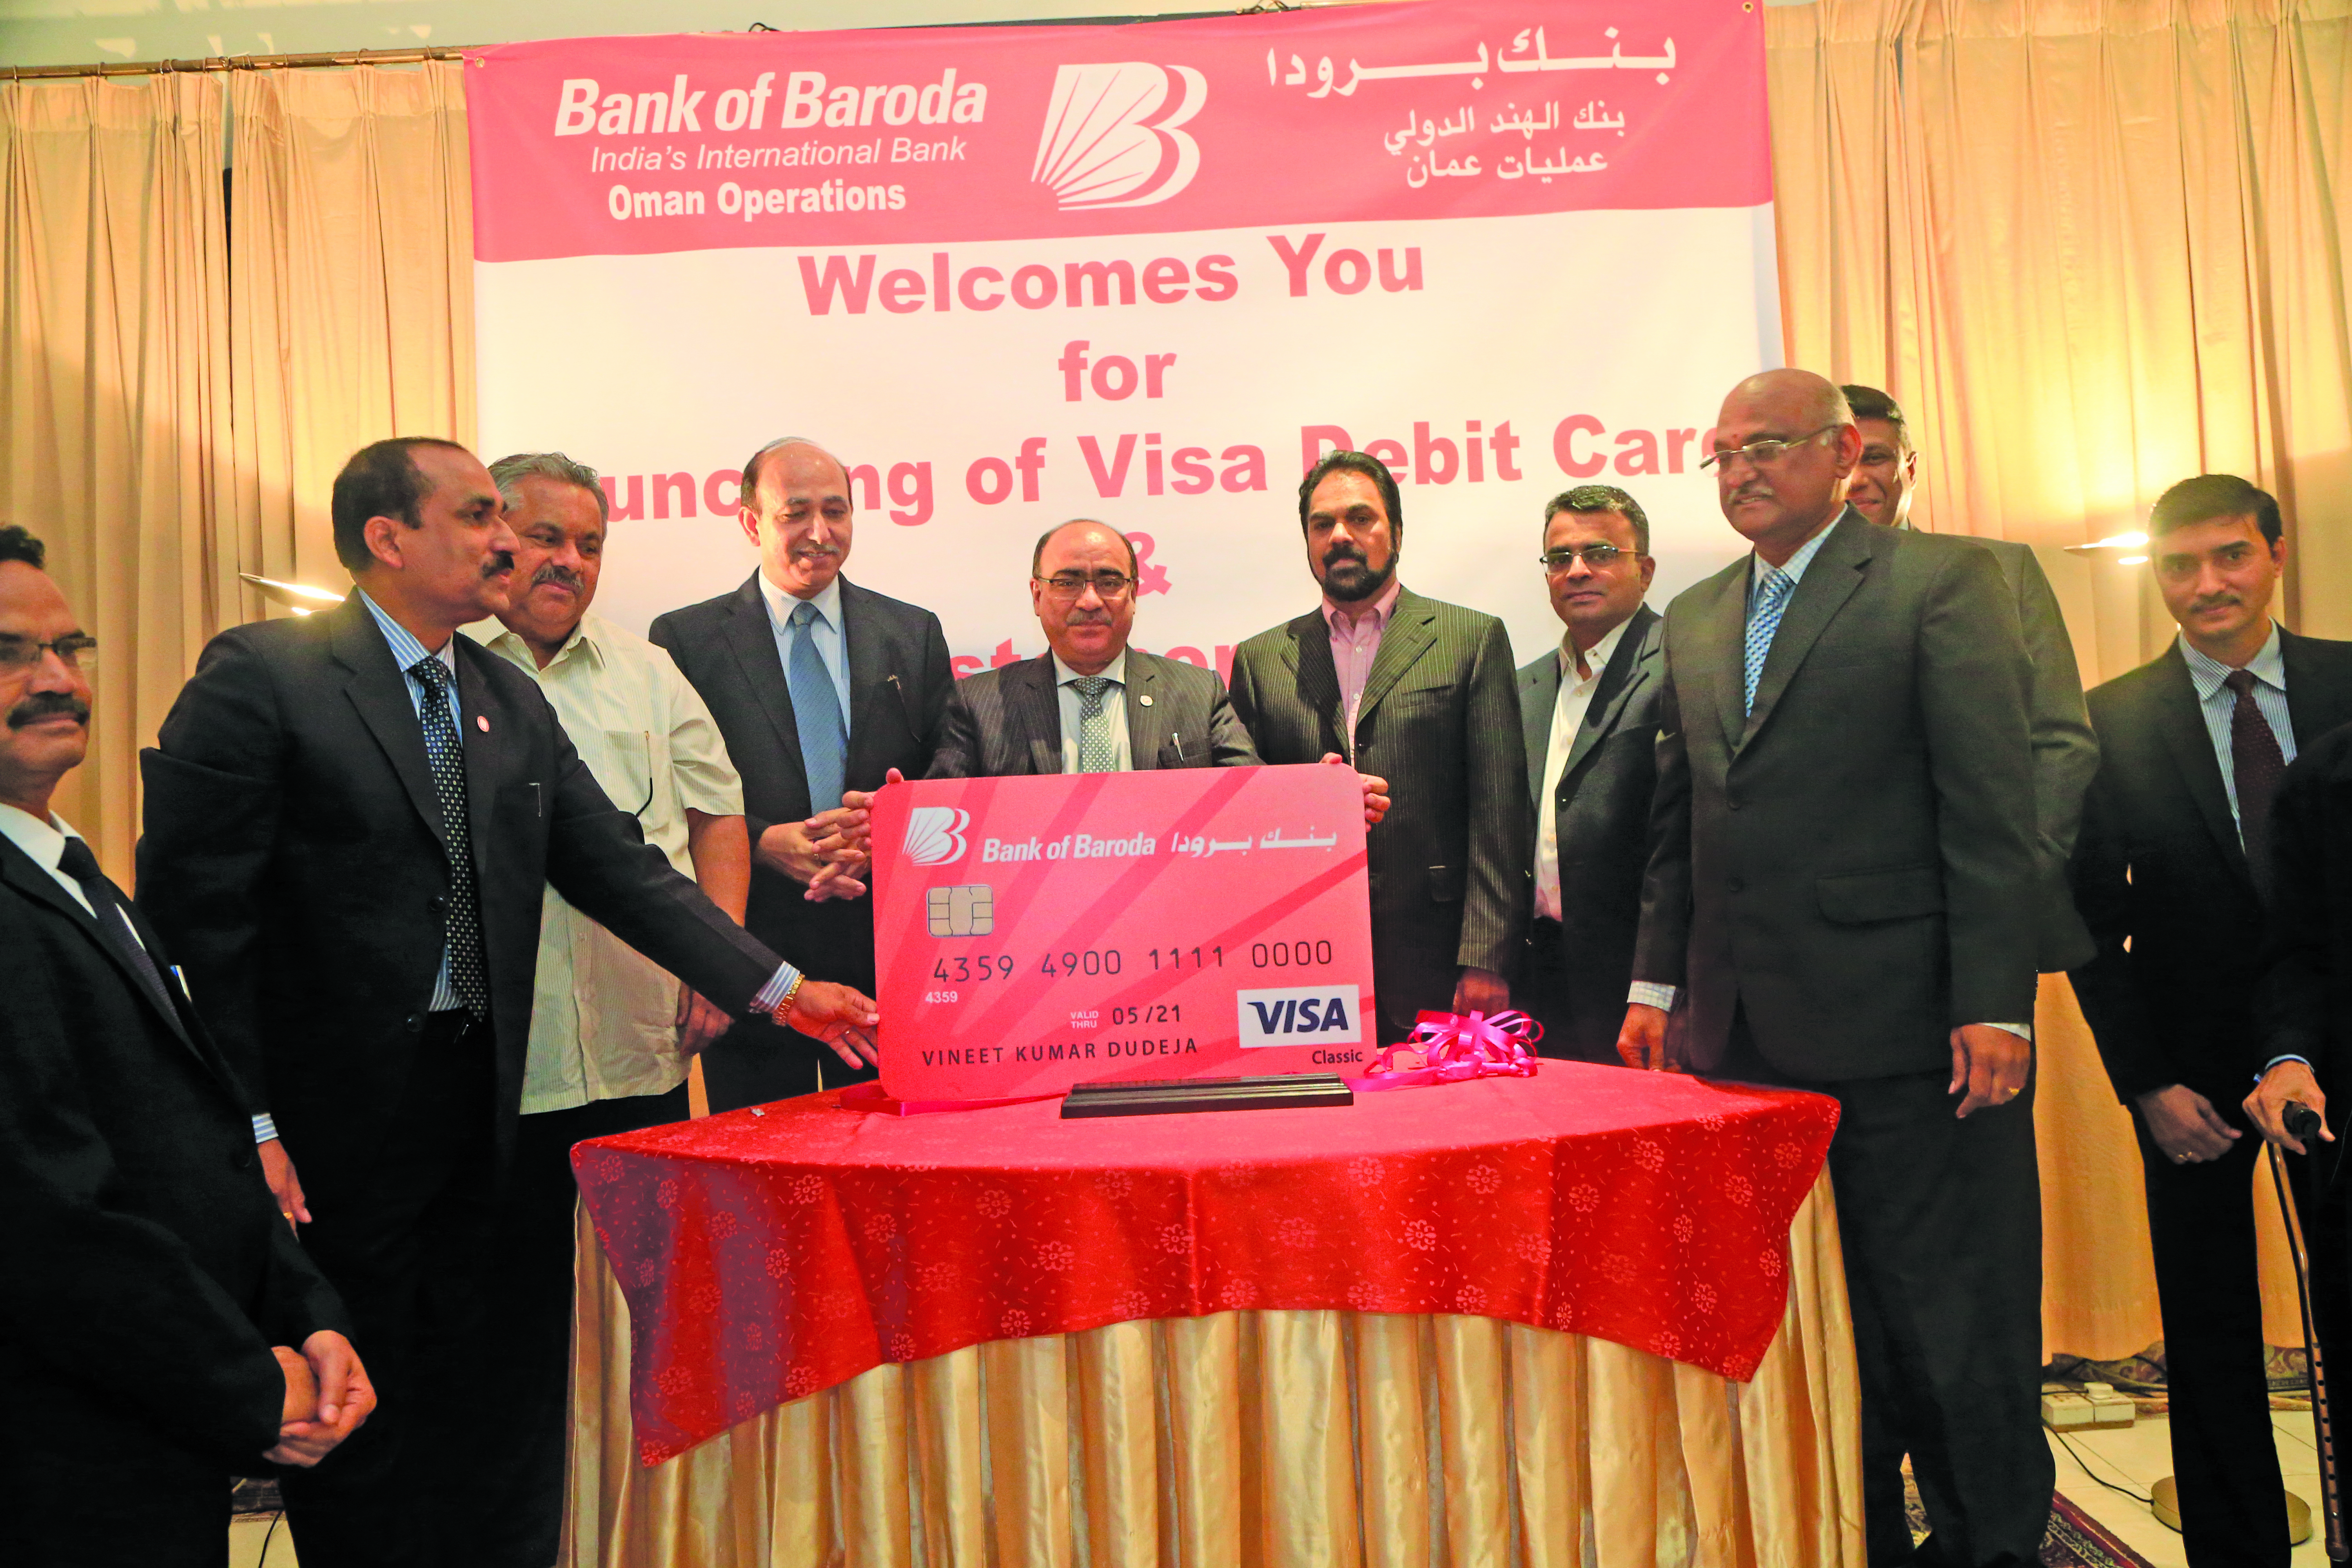 Bank of Baroda launches Visa Debit Card in Oman